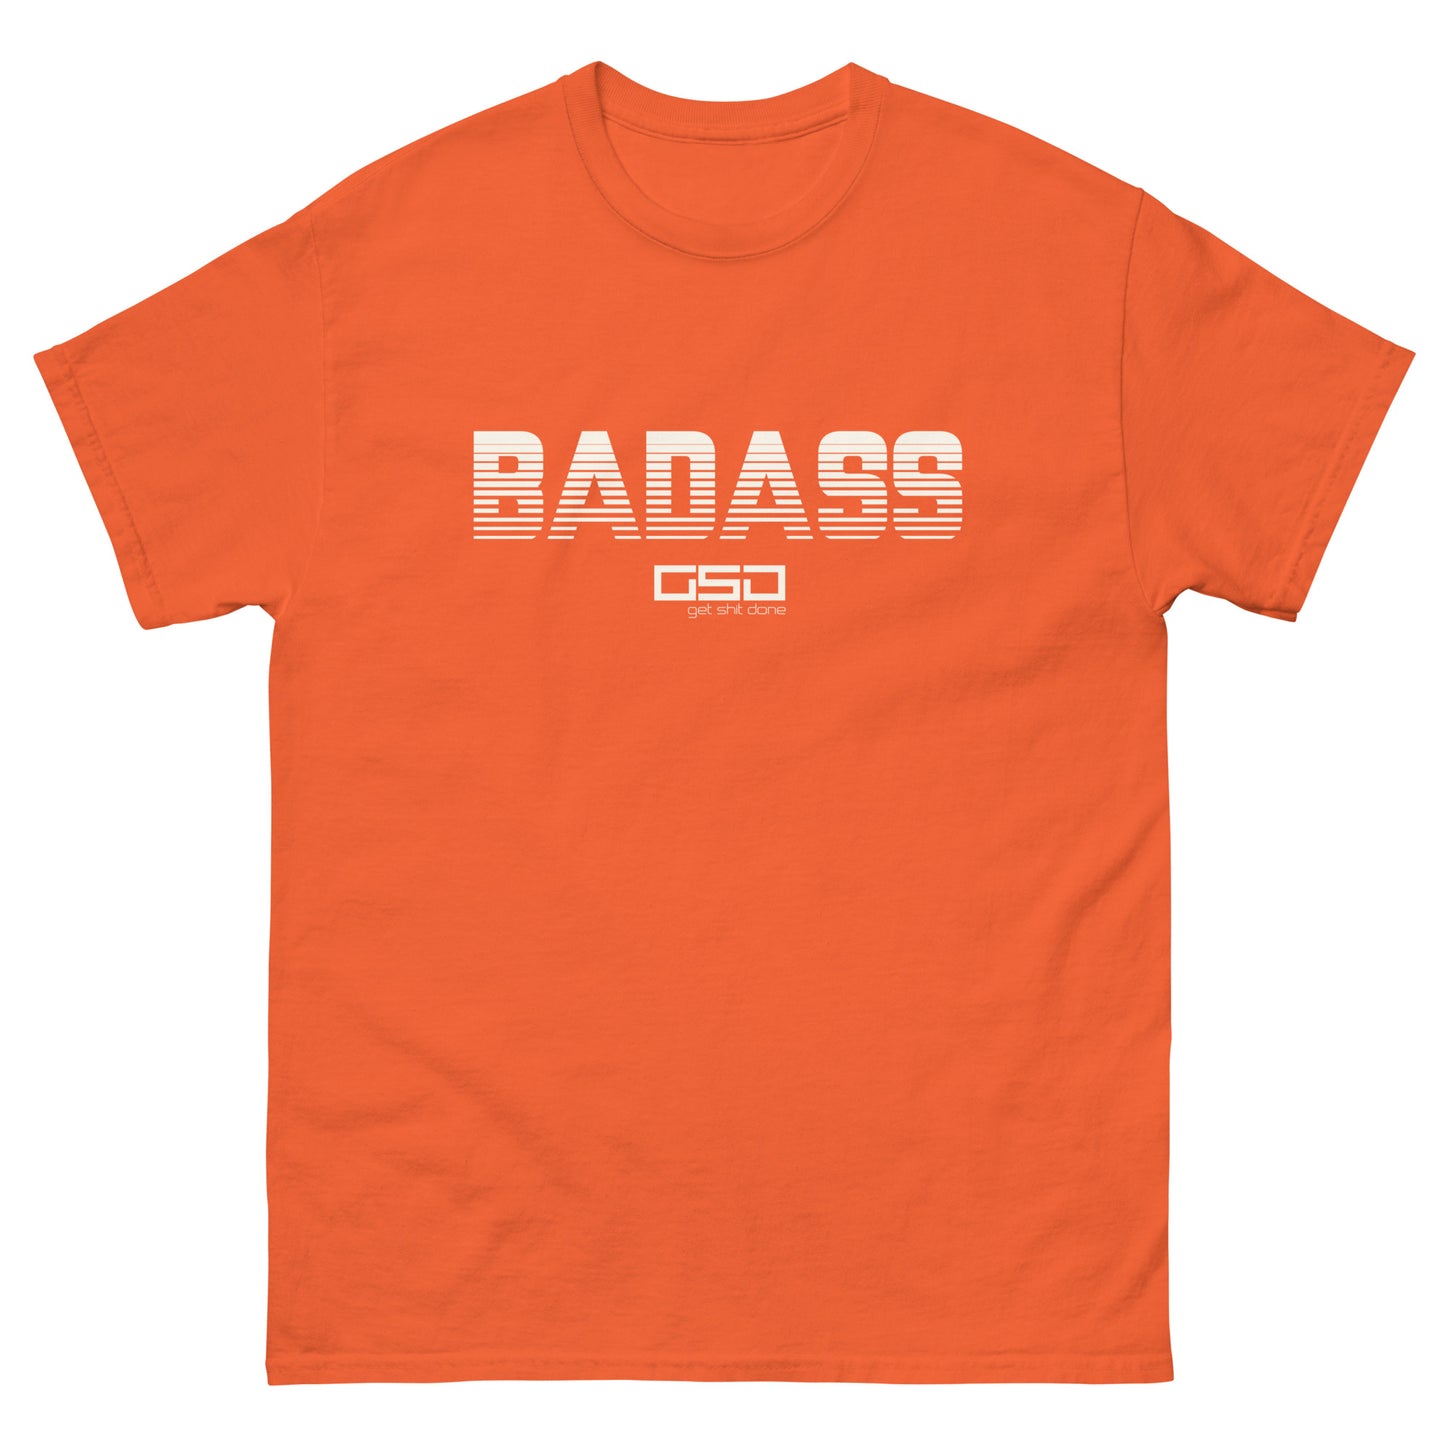 BADASS-Classic tee